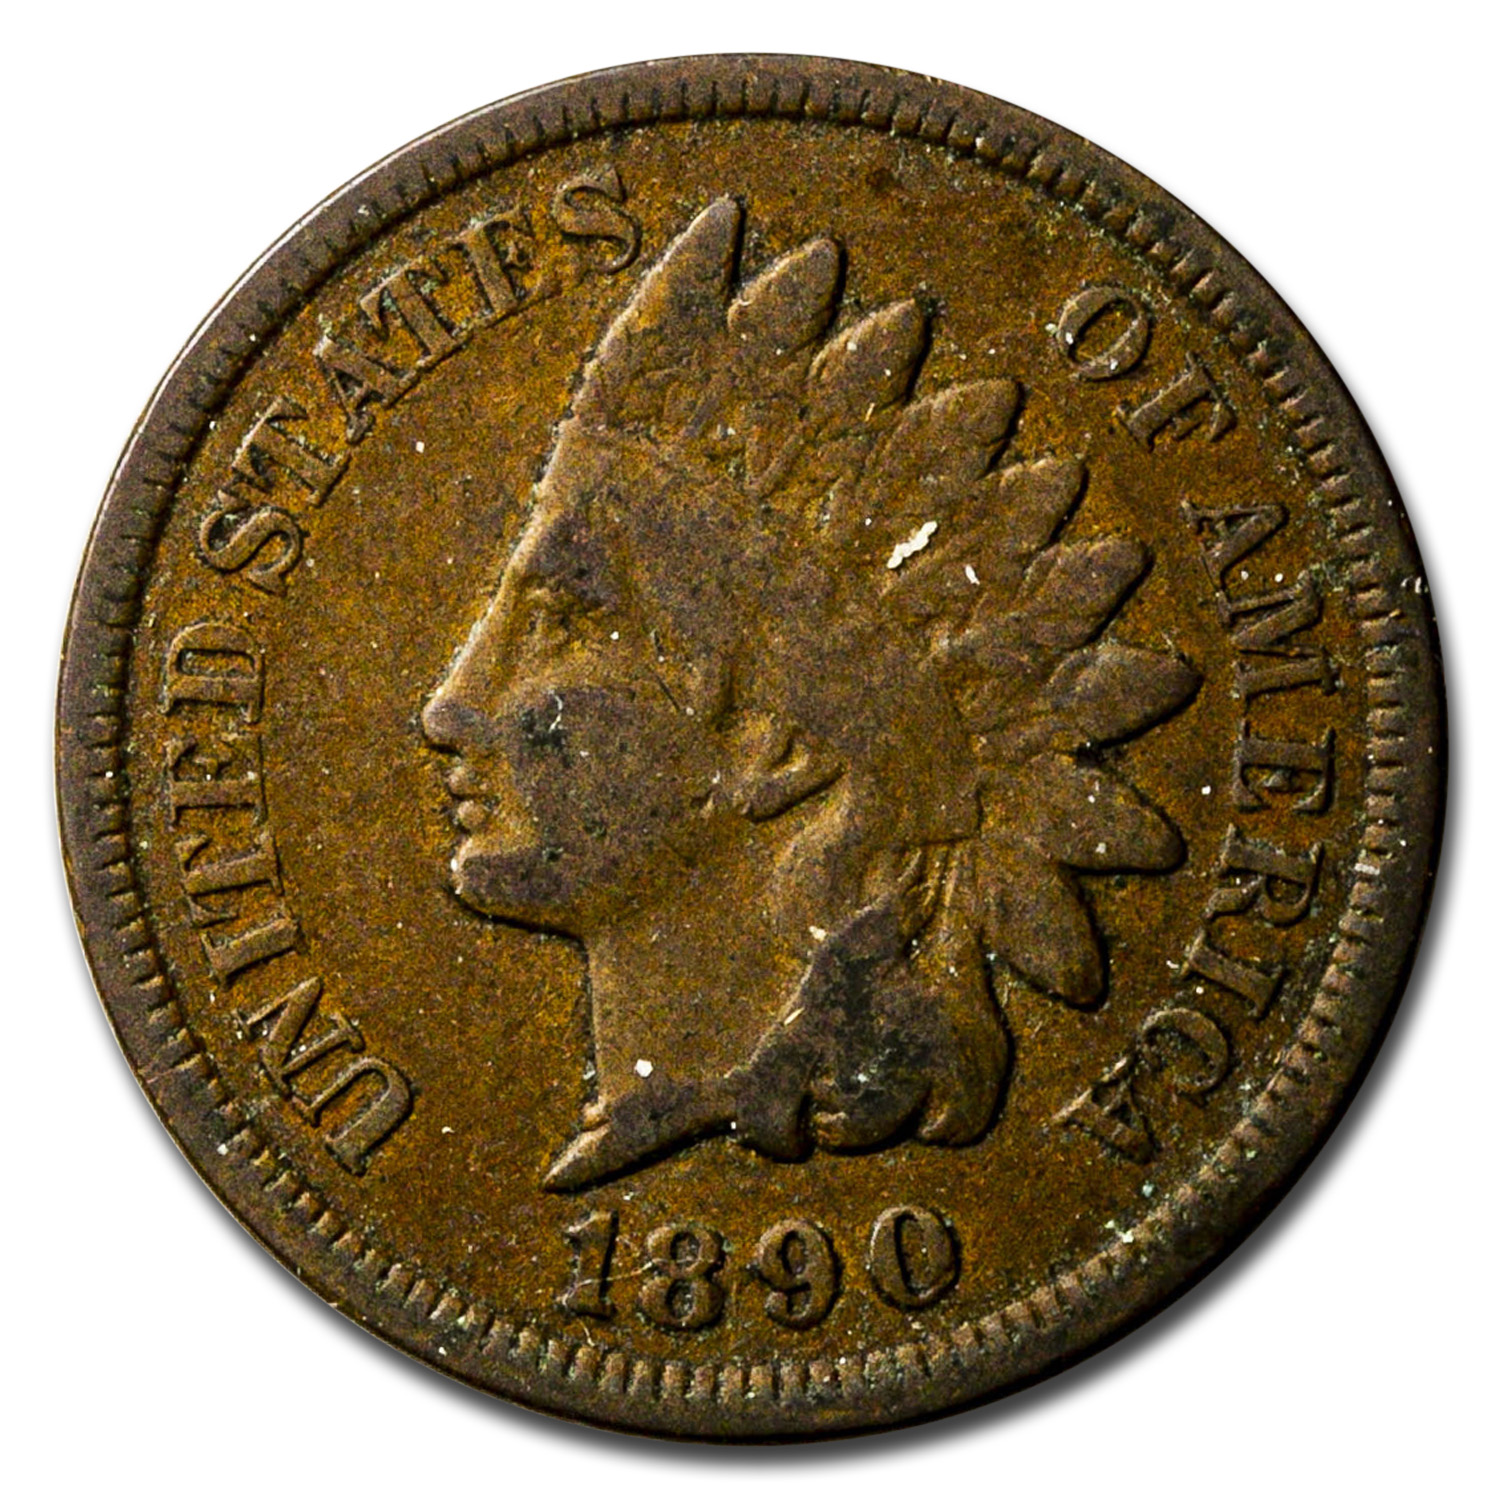 Buy 1890 Indian Head Cent Good+